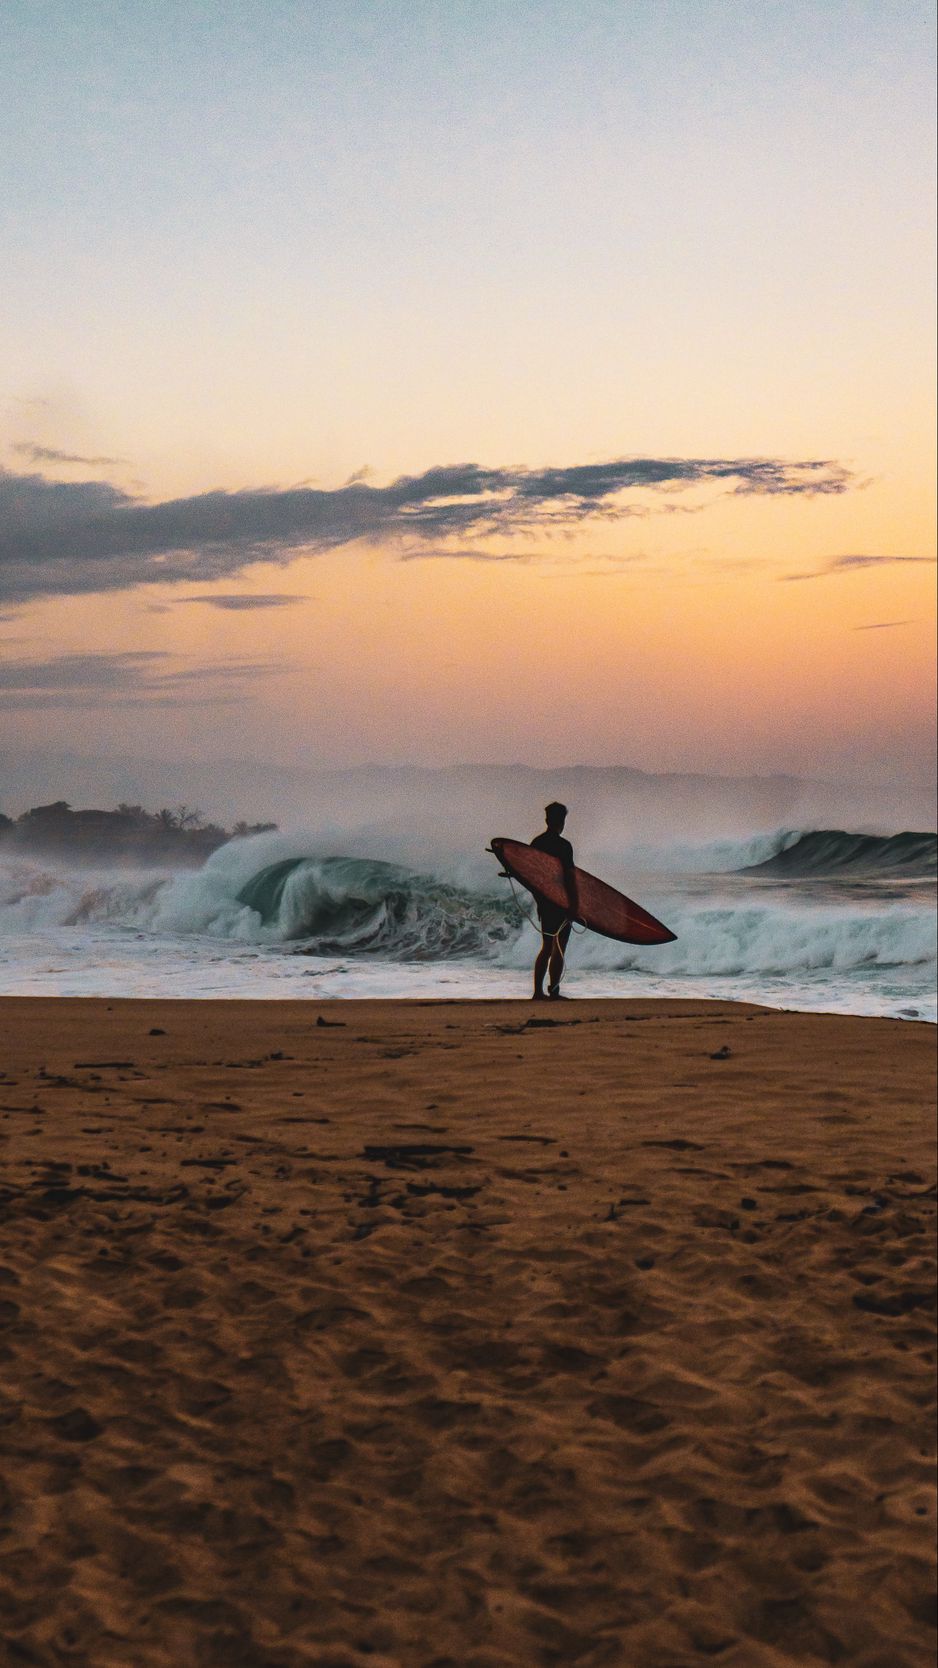 Surfing In Ocean Waves IPhone Wallpaper  IPhone Wallpapers  iPhone  Wallpapers